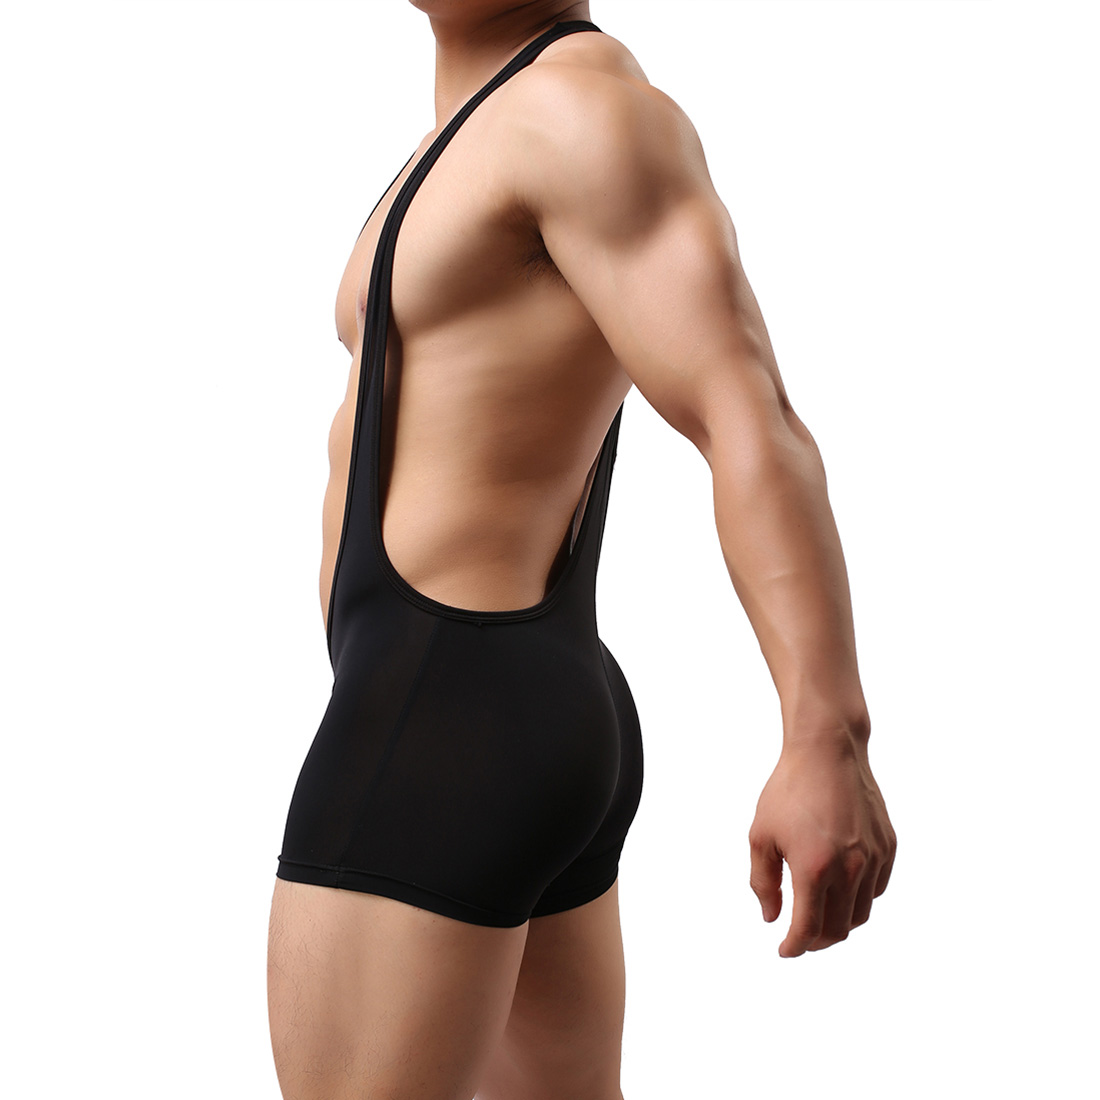 Men's Sexy Lingerie Underwear Sport Fitness One-pieces Swimsuit Wrestling Dress WH41 Black L